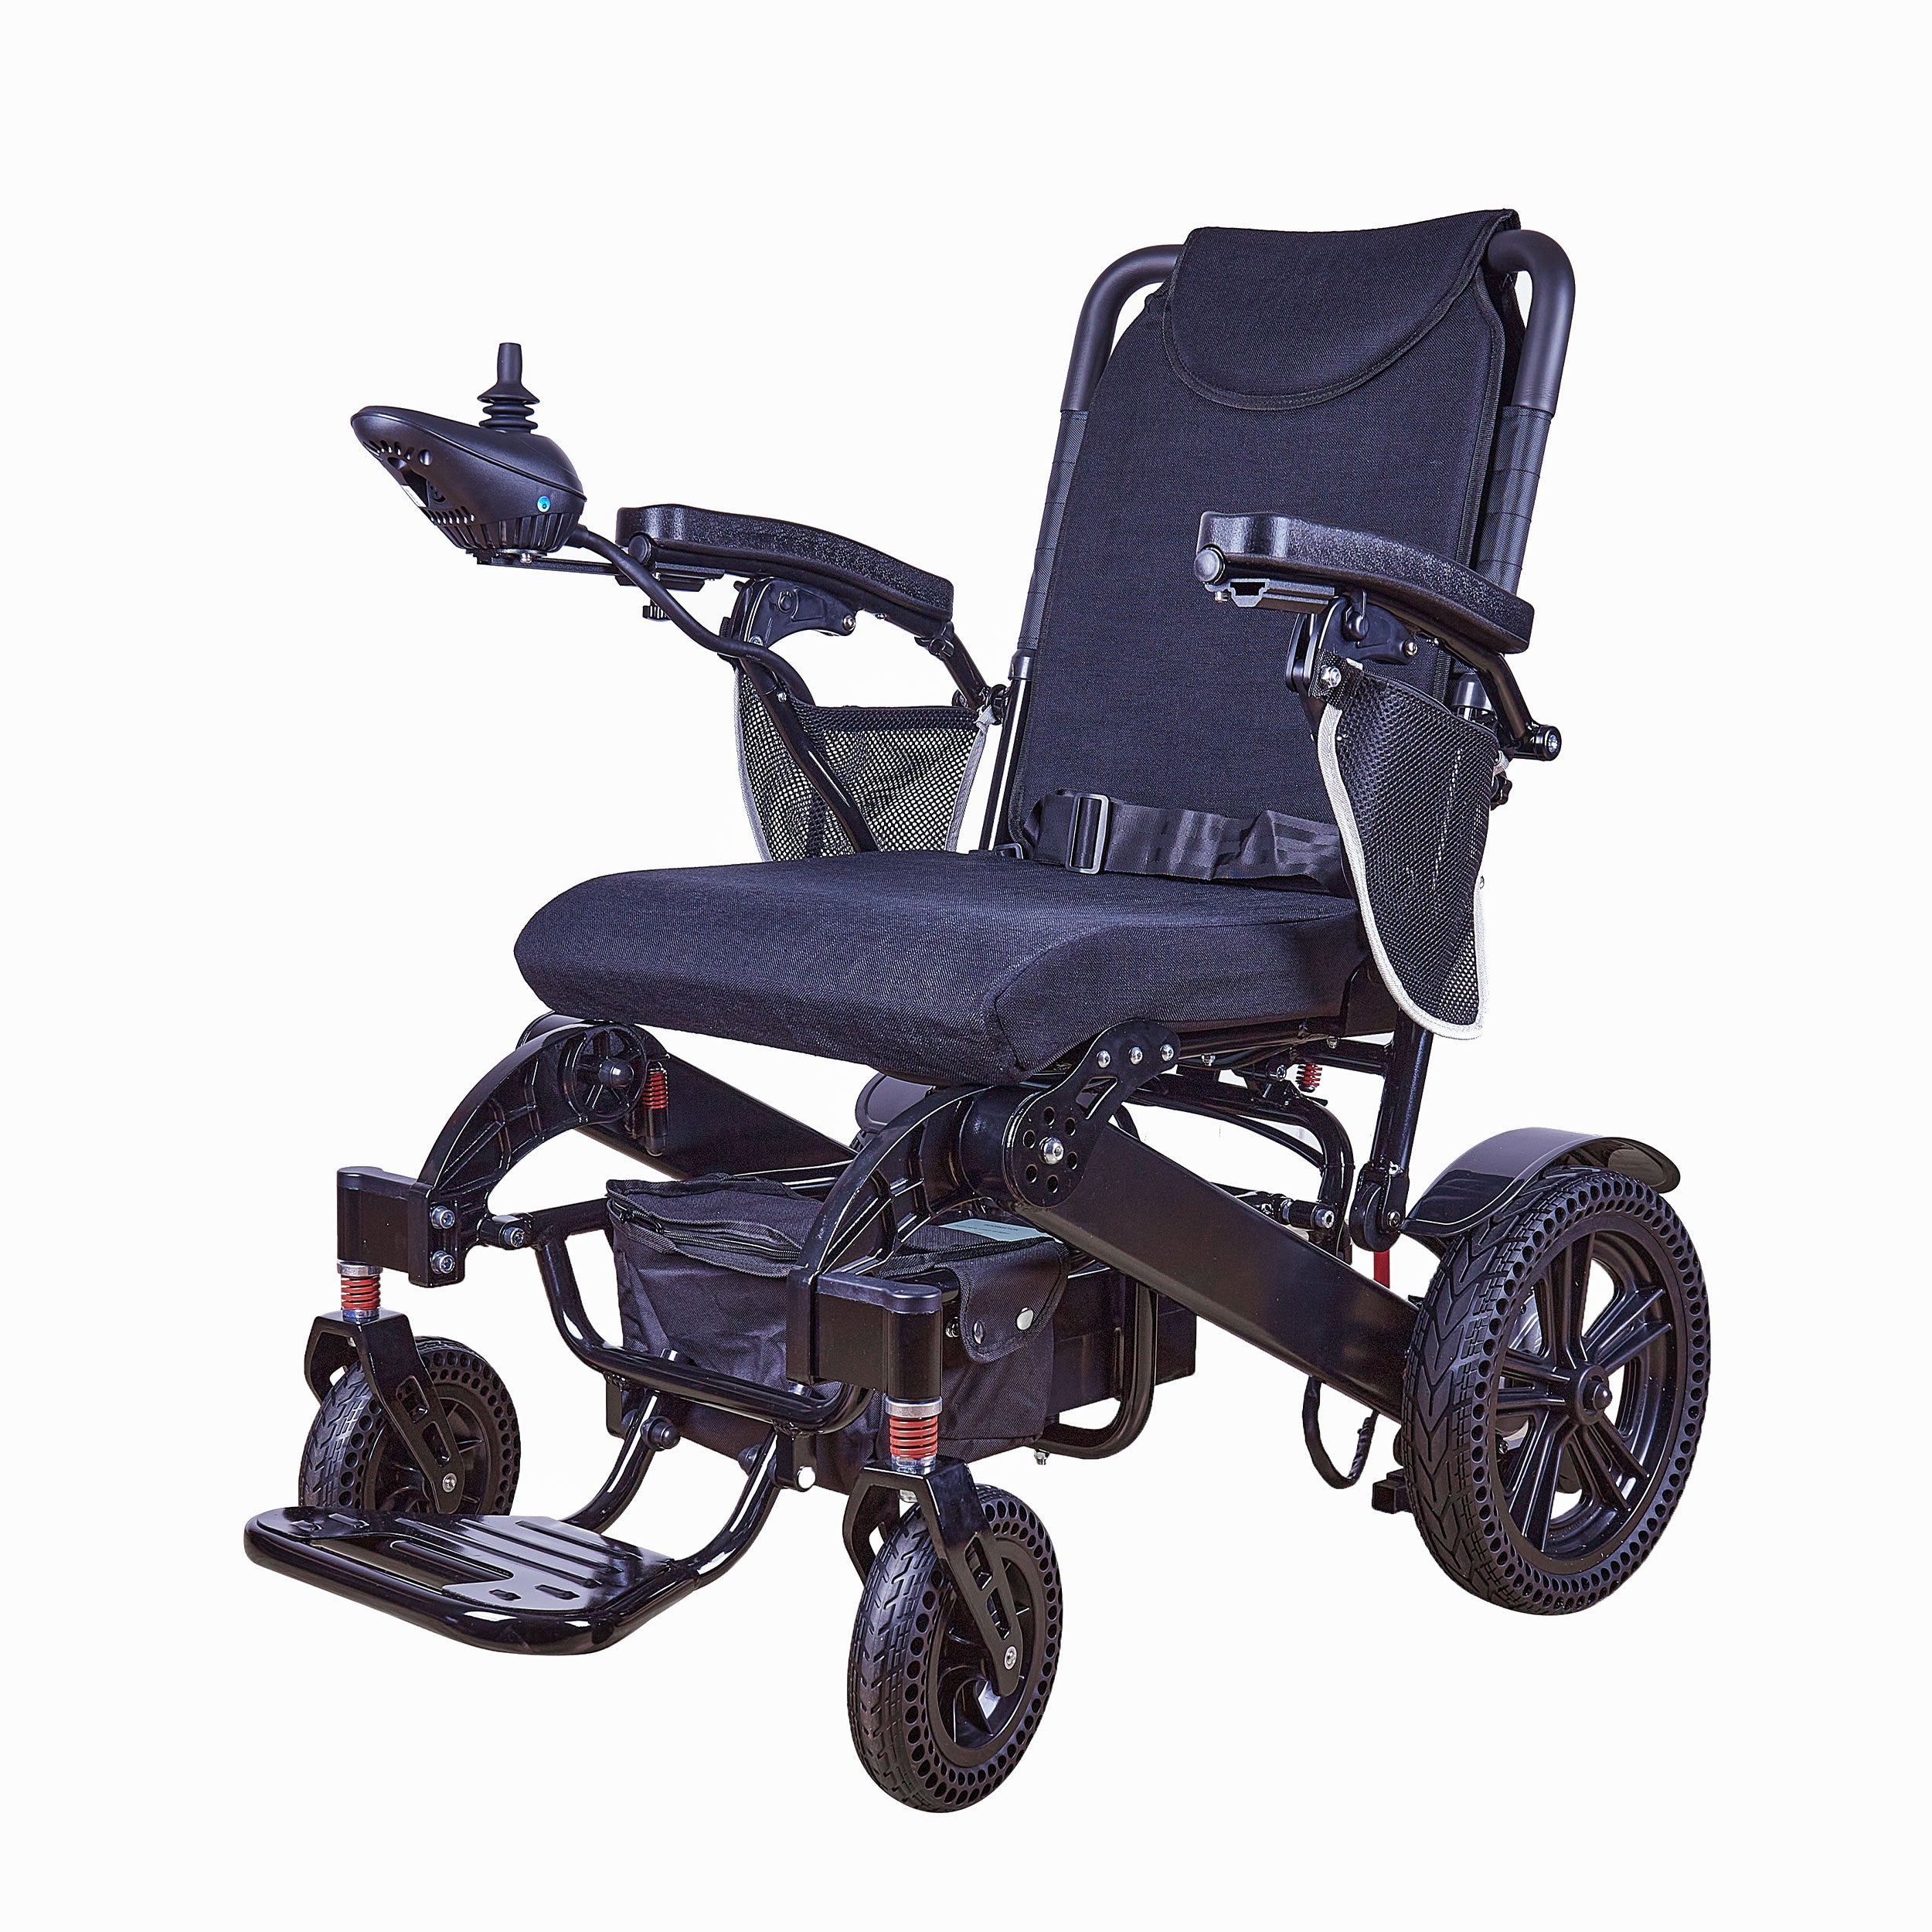 Rubicon DX08 - All Terrain & Heavy Duty Electric Wheelchair: Extra Durable,  Long-Range, Foldable & Lightweight | Premium Dual Motor, Power Wheelchair